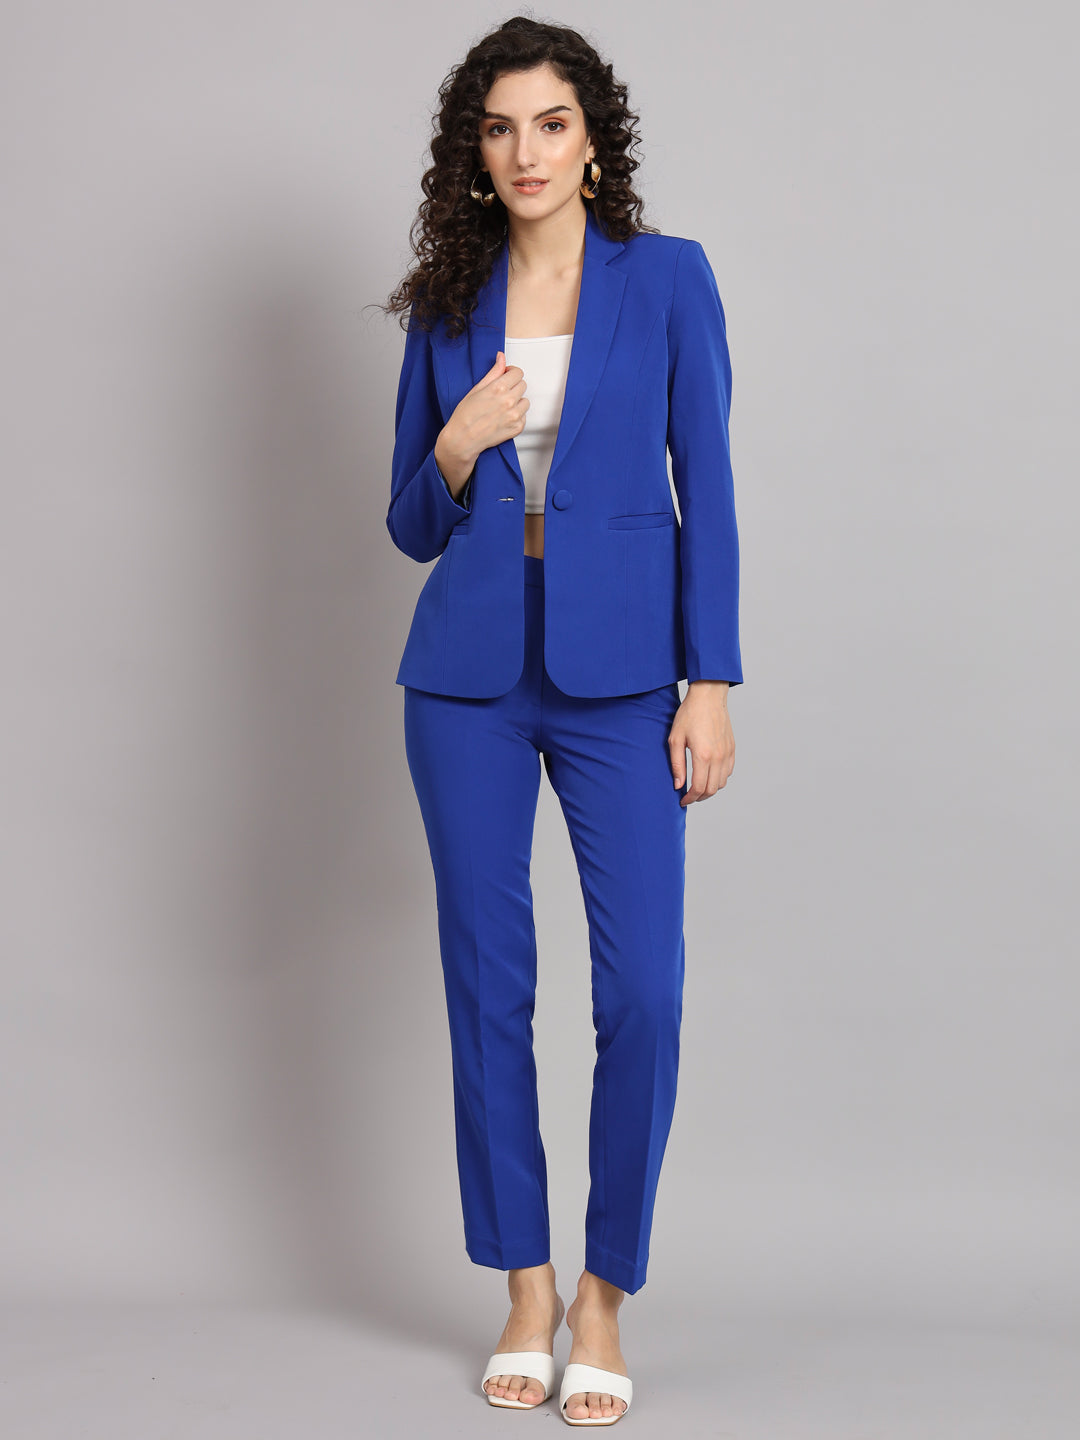 Blue Pant Suit for Women, Three Piece Suit, Women Formal Wear